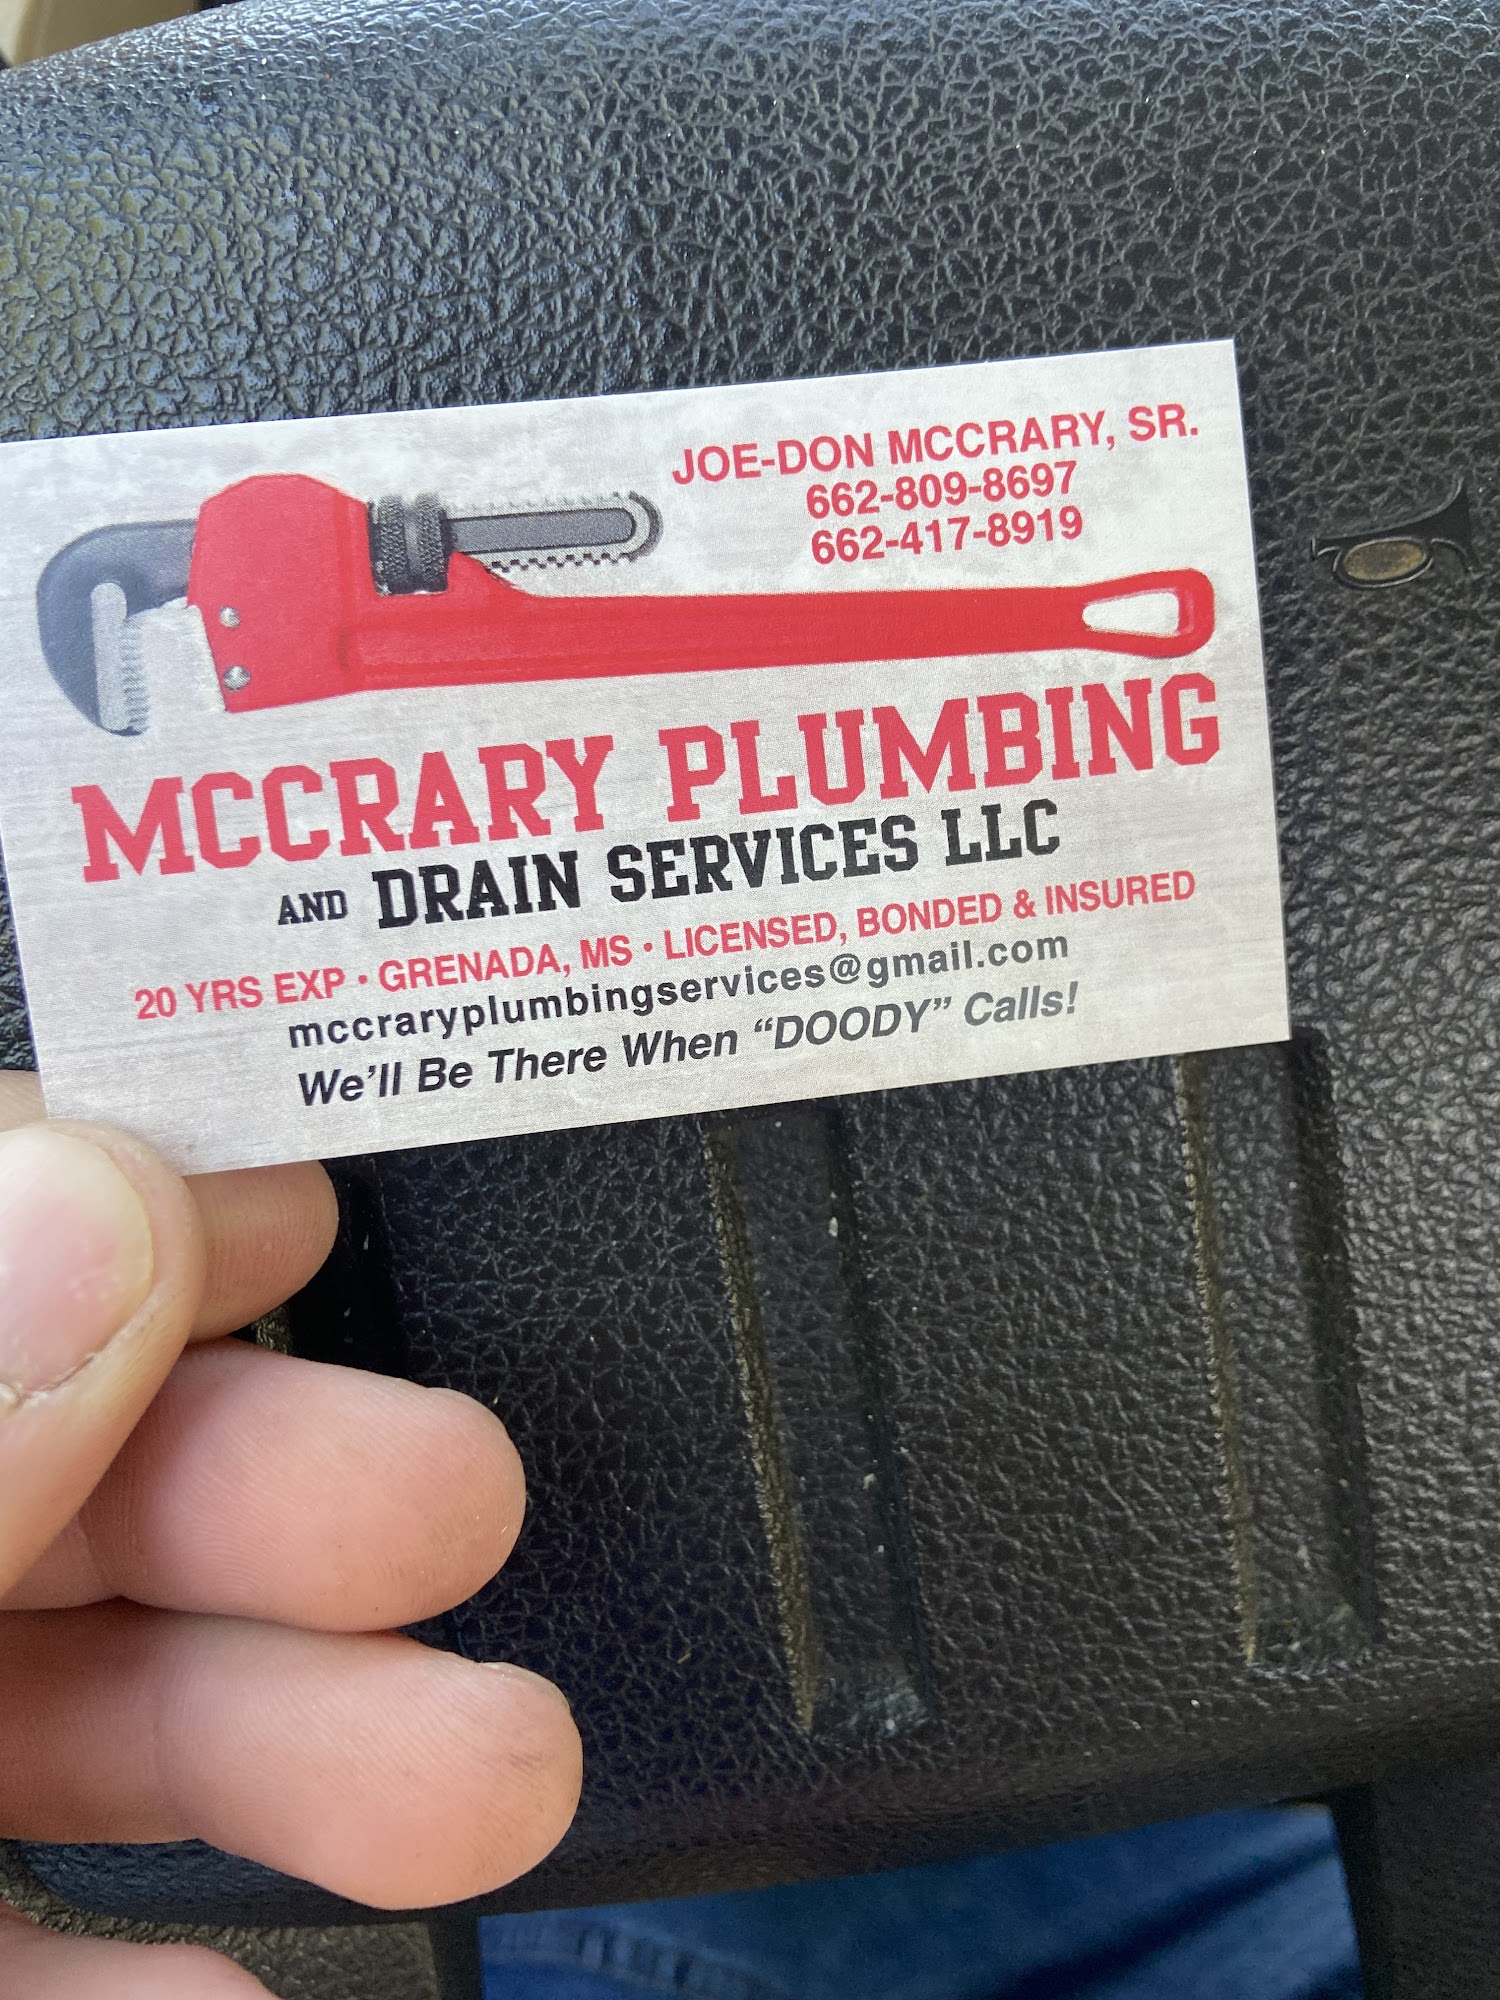 McCrary Plumbing & Drain Services LLC